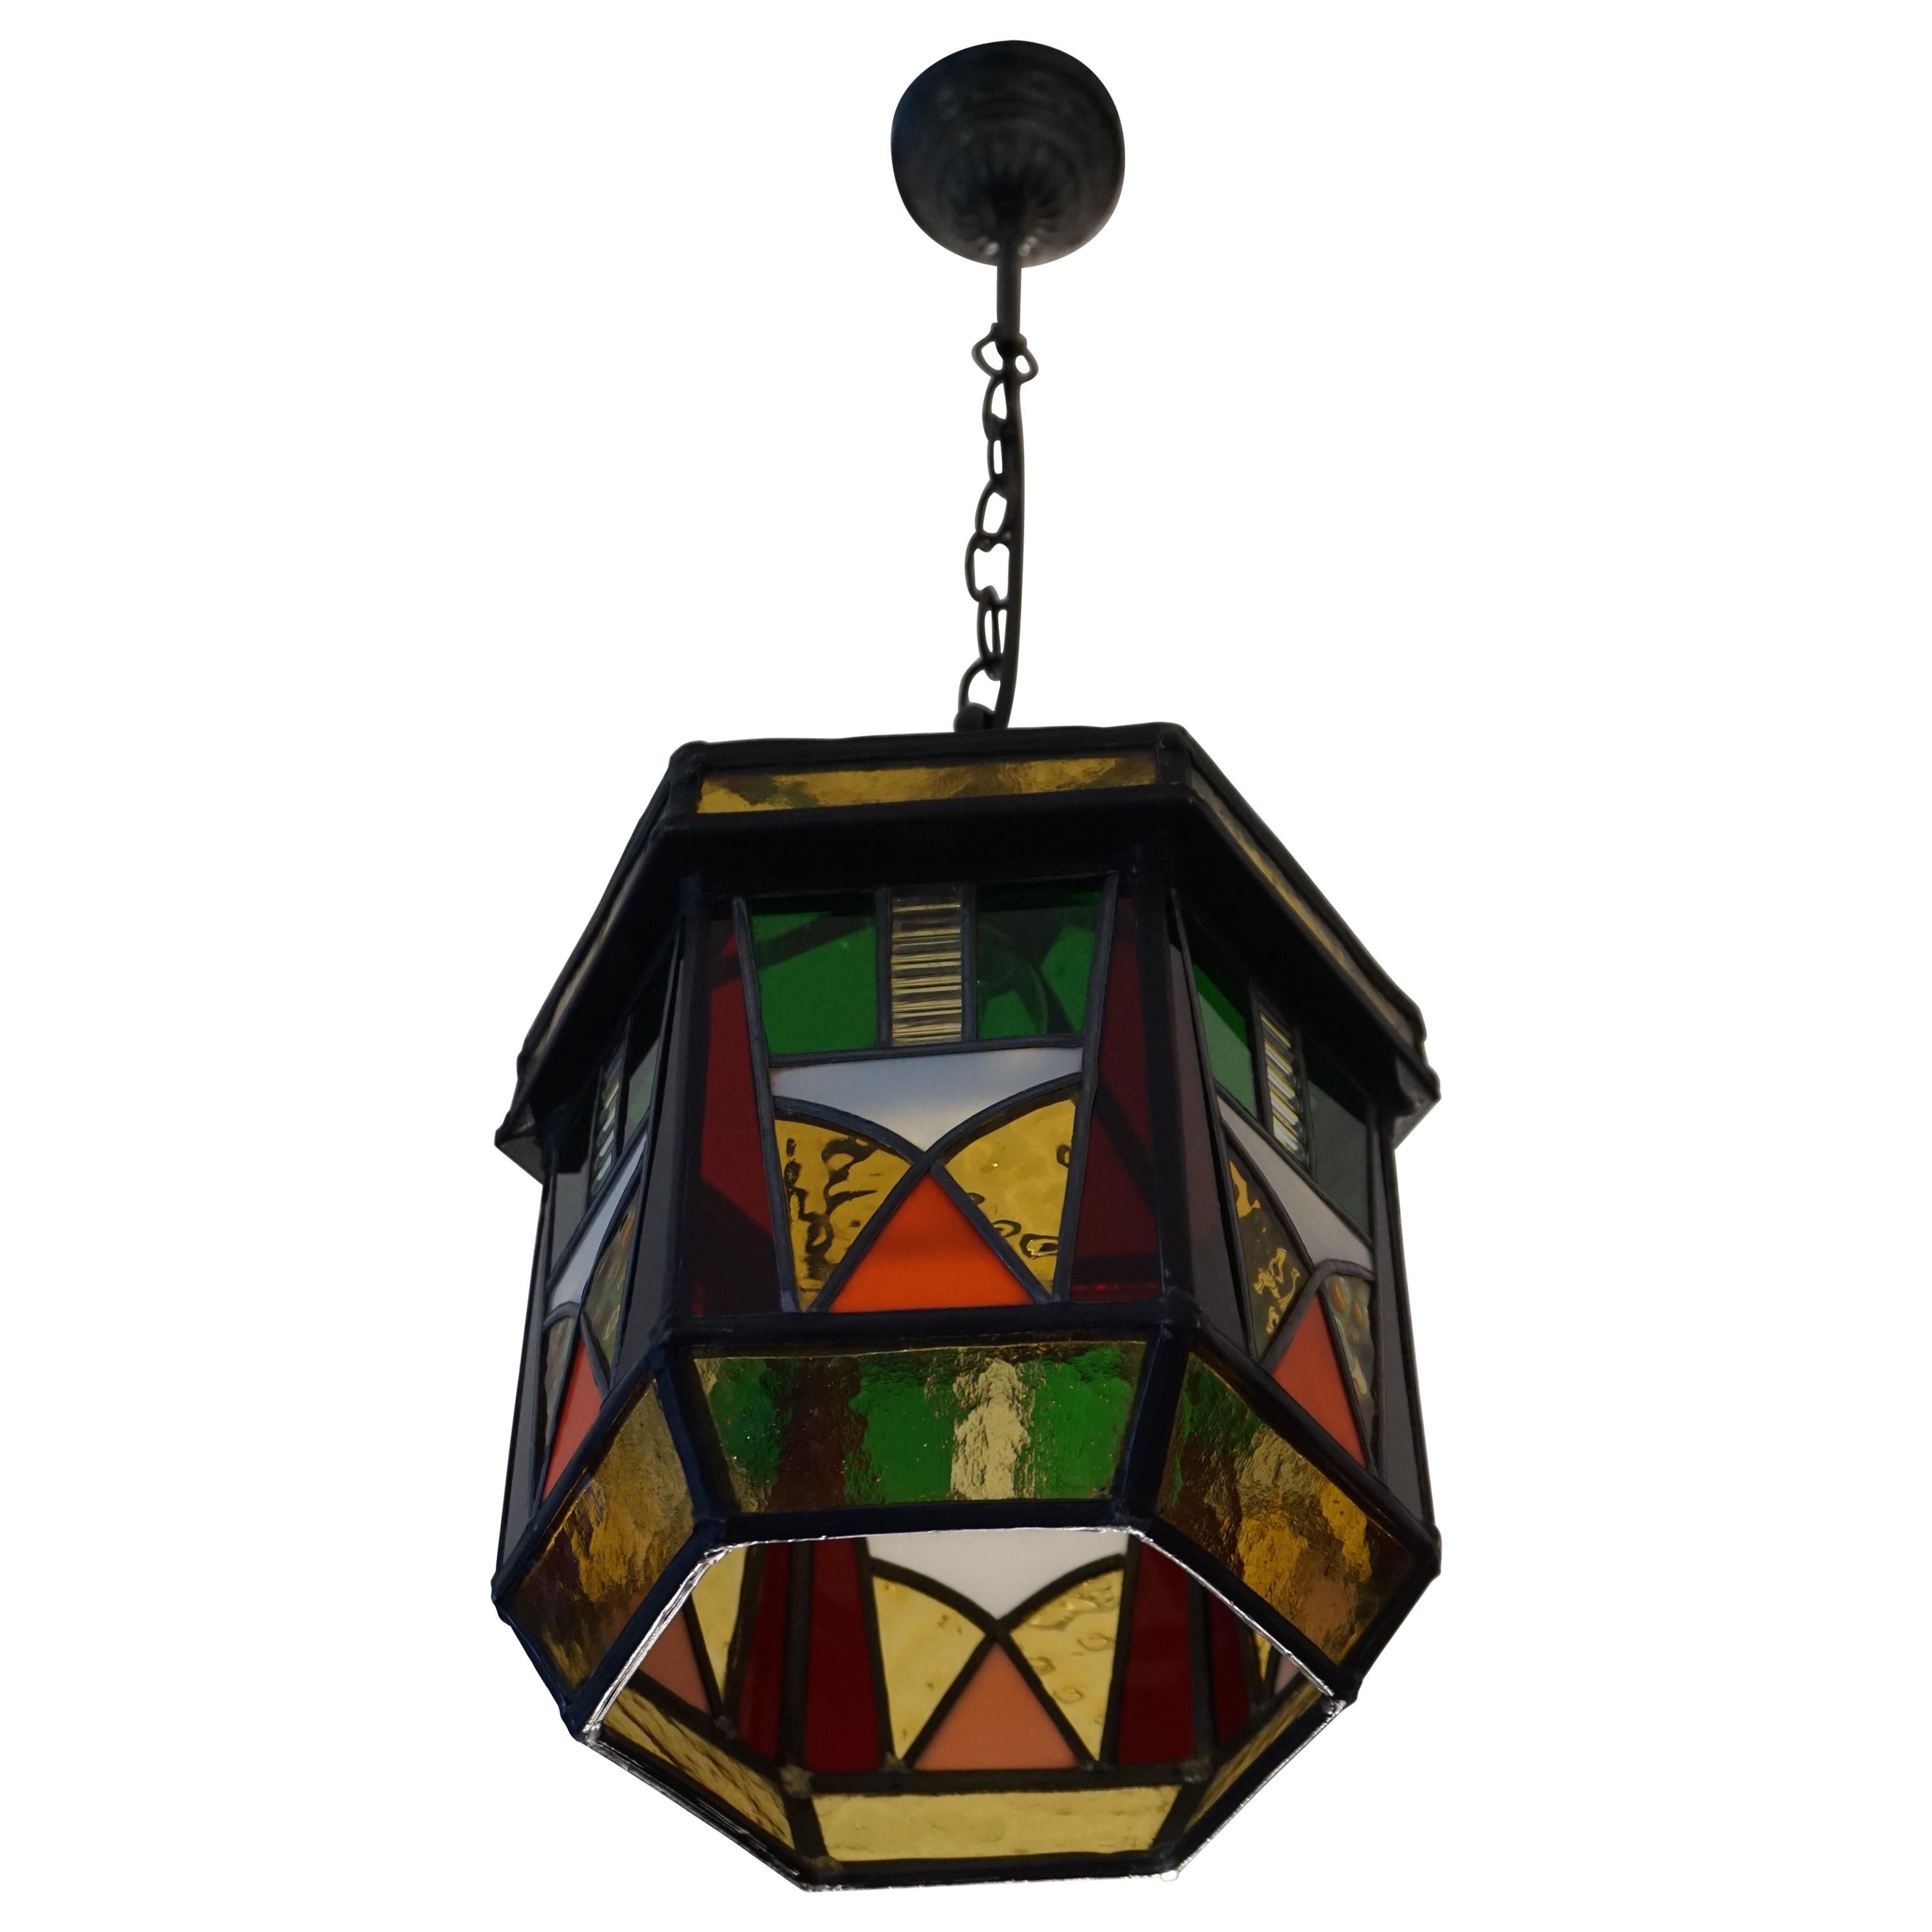 Stunning Geometrical Design and Great Colors, Art Deco Pendant Light Fixture